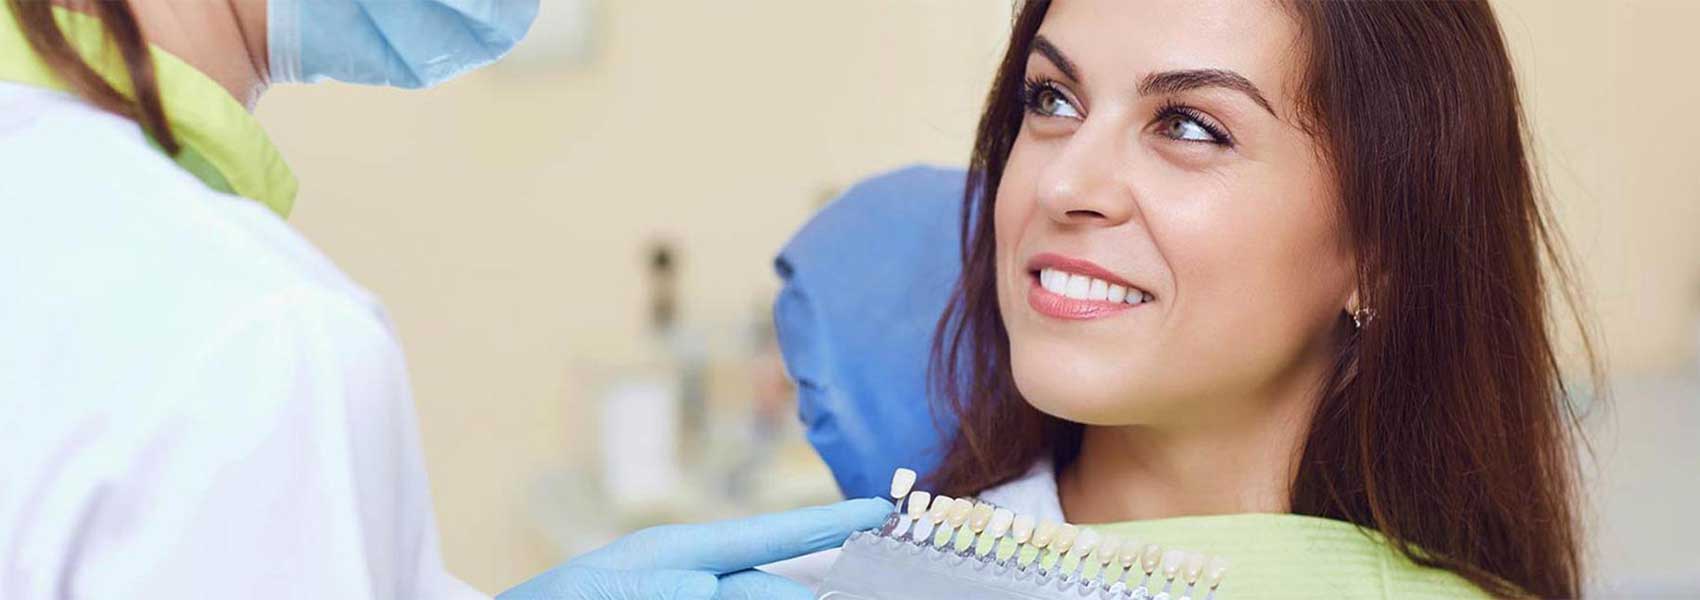 Beautiful woman smiling at dental